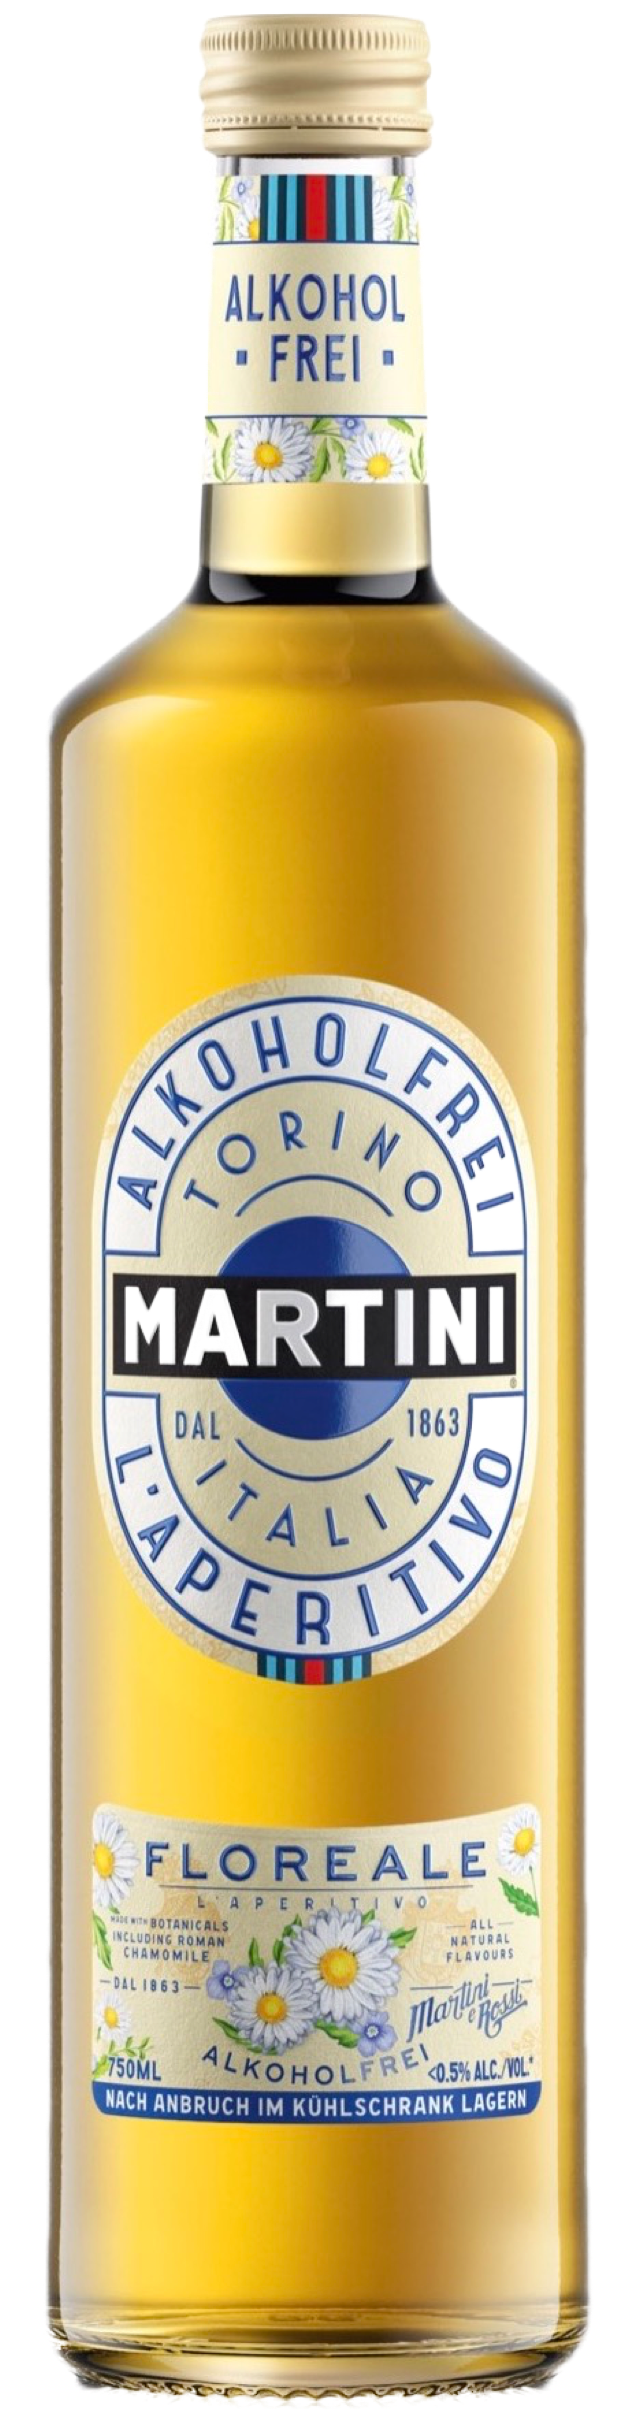 Martini Floreale Alkoholfrei weniger 0,5% vol. 0,75L